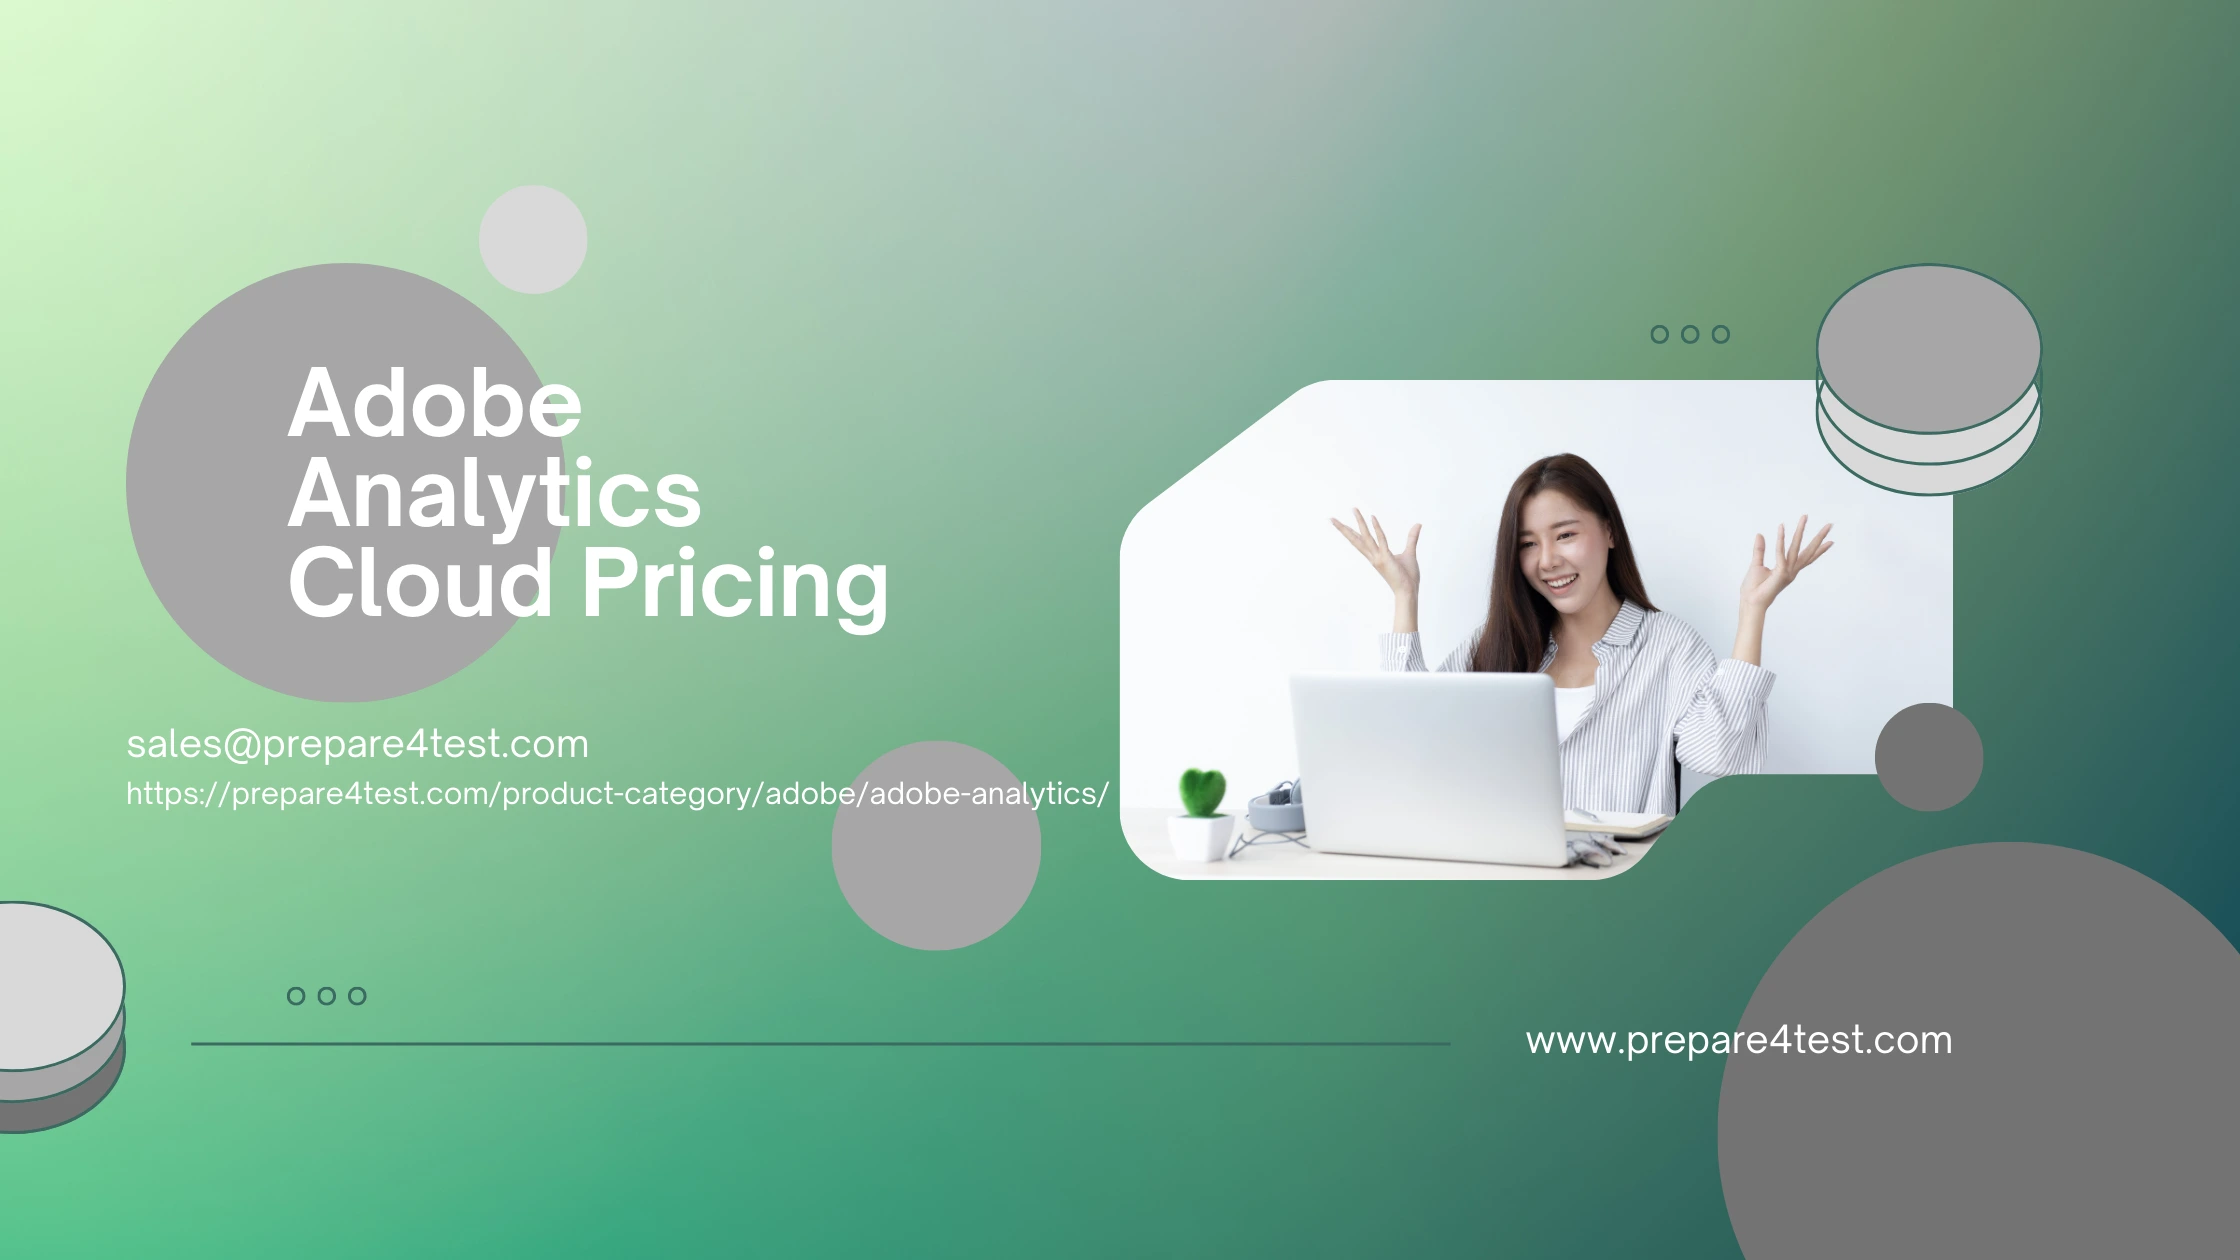 Adobe Analytics Cloud Pricing promotion